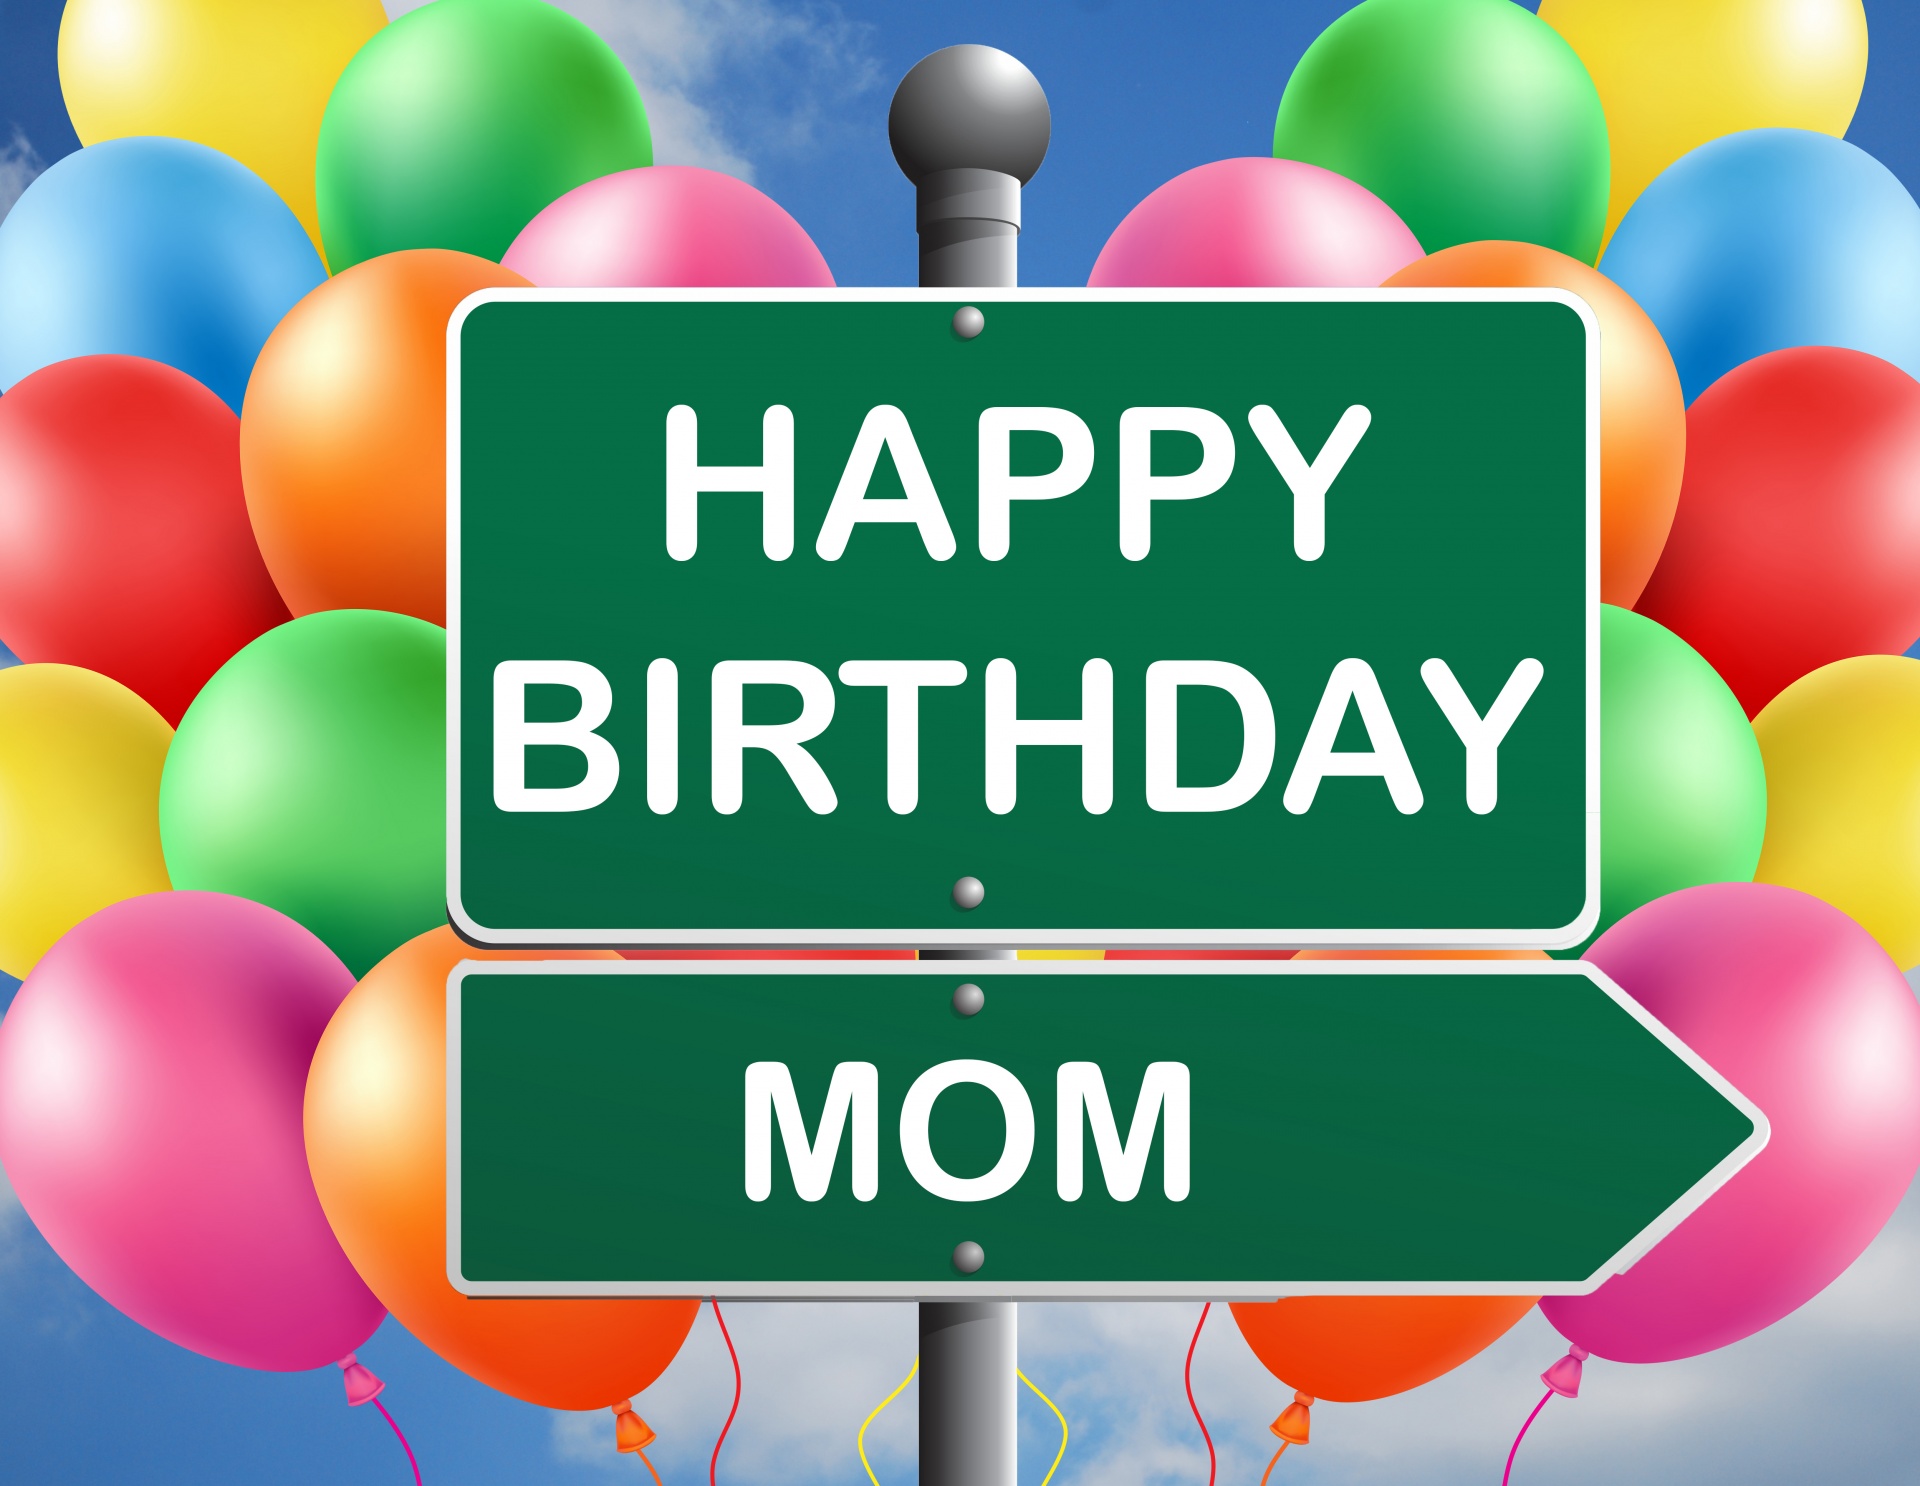 Download free photo of Happy birthday,birthday,mom,happy birthday mom,balloons  - from 